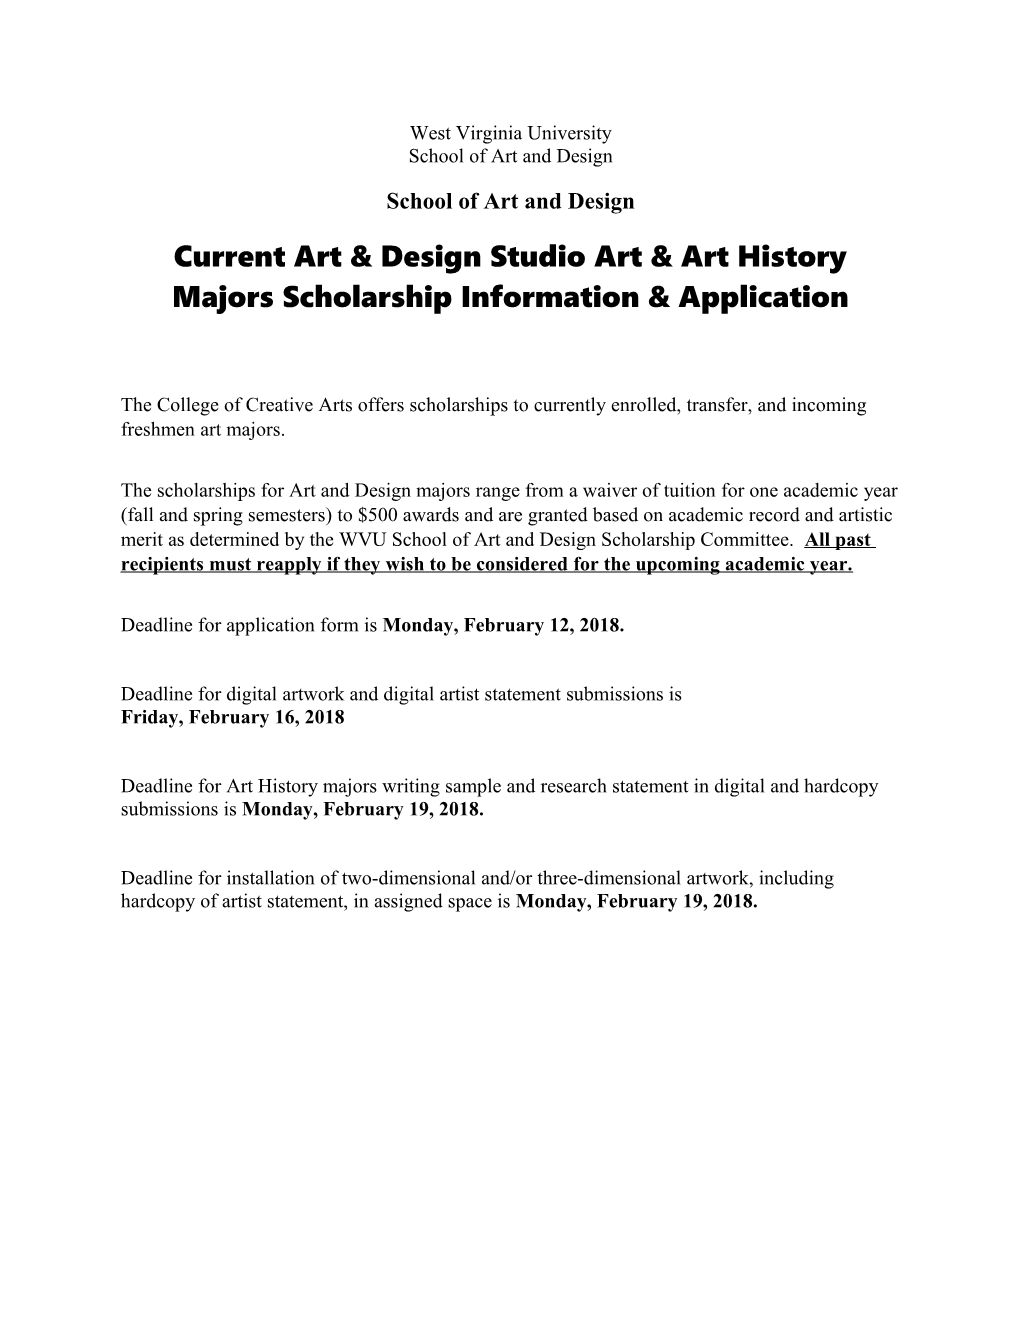 Current Art & Design Studio Art & Art History Majors Scholarship Information & Application